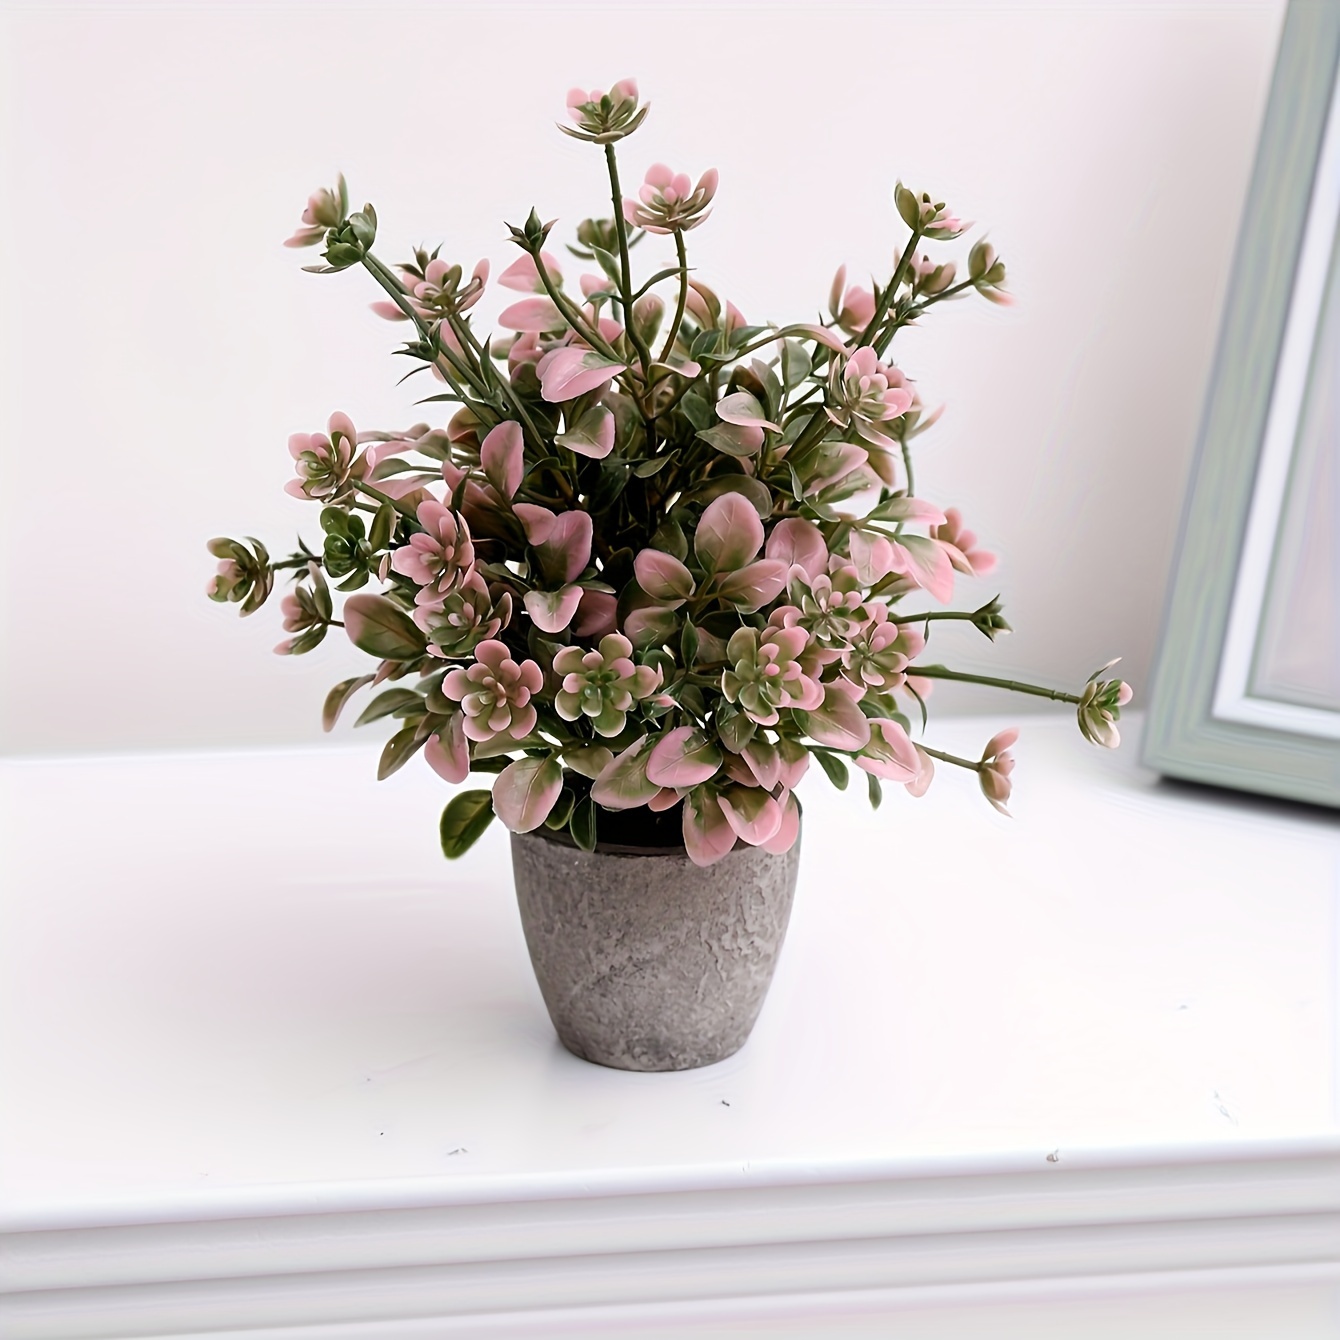 

1pc, Artificial Potted Plant, Nordic Style, Decorative Faux Floral Bonsai, Desktop Home Decor, Office Ornament, Rustic Tabletop Greenery